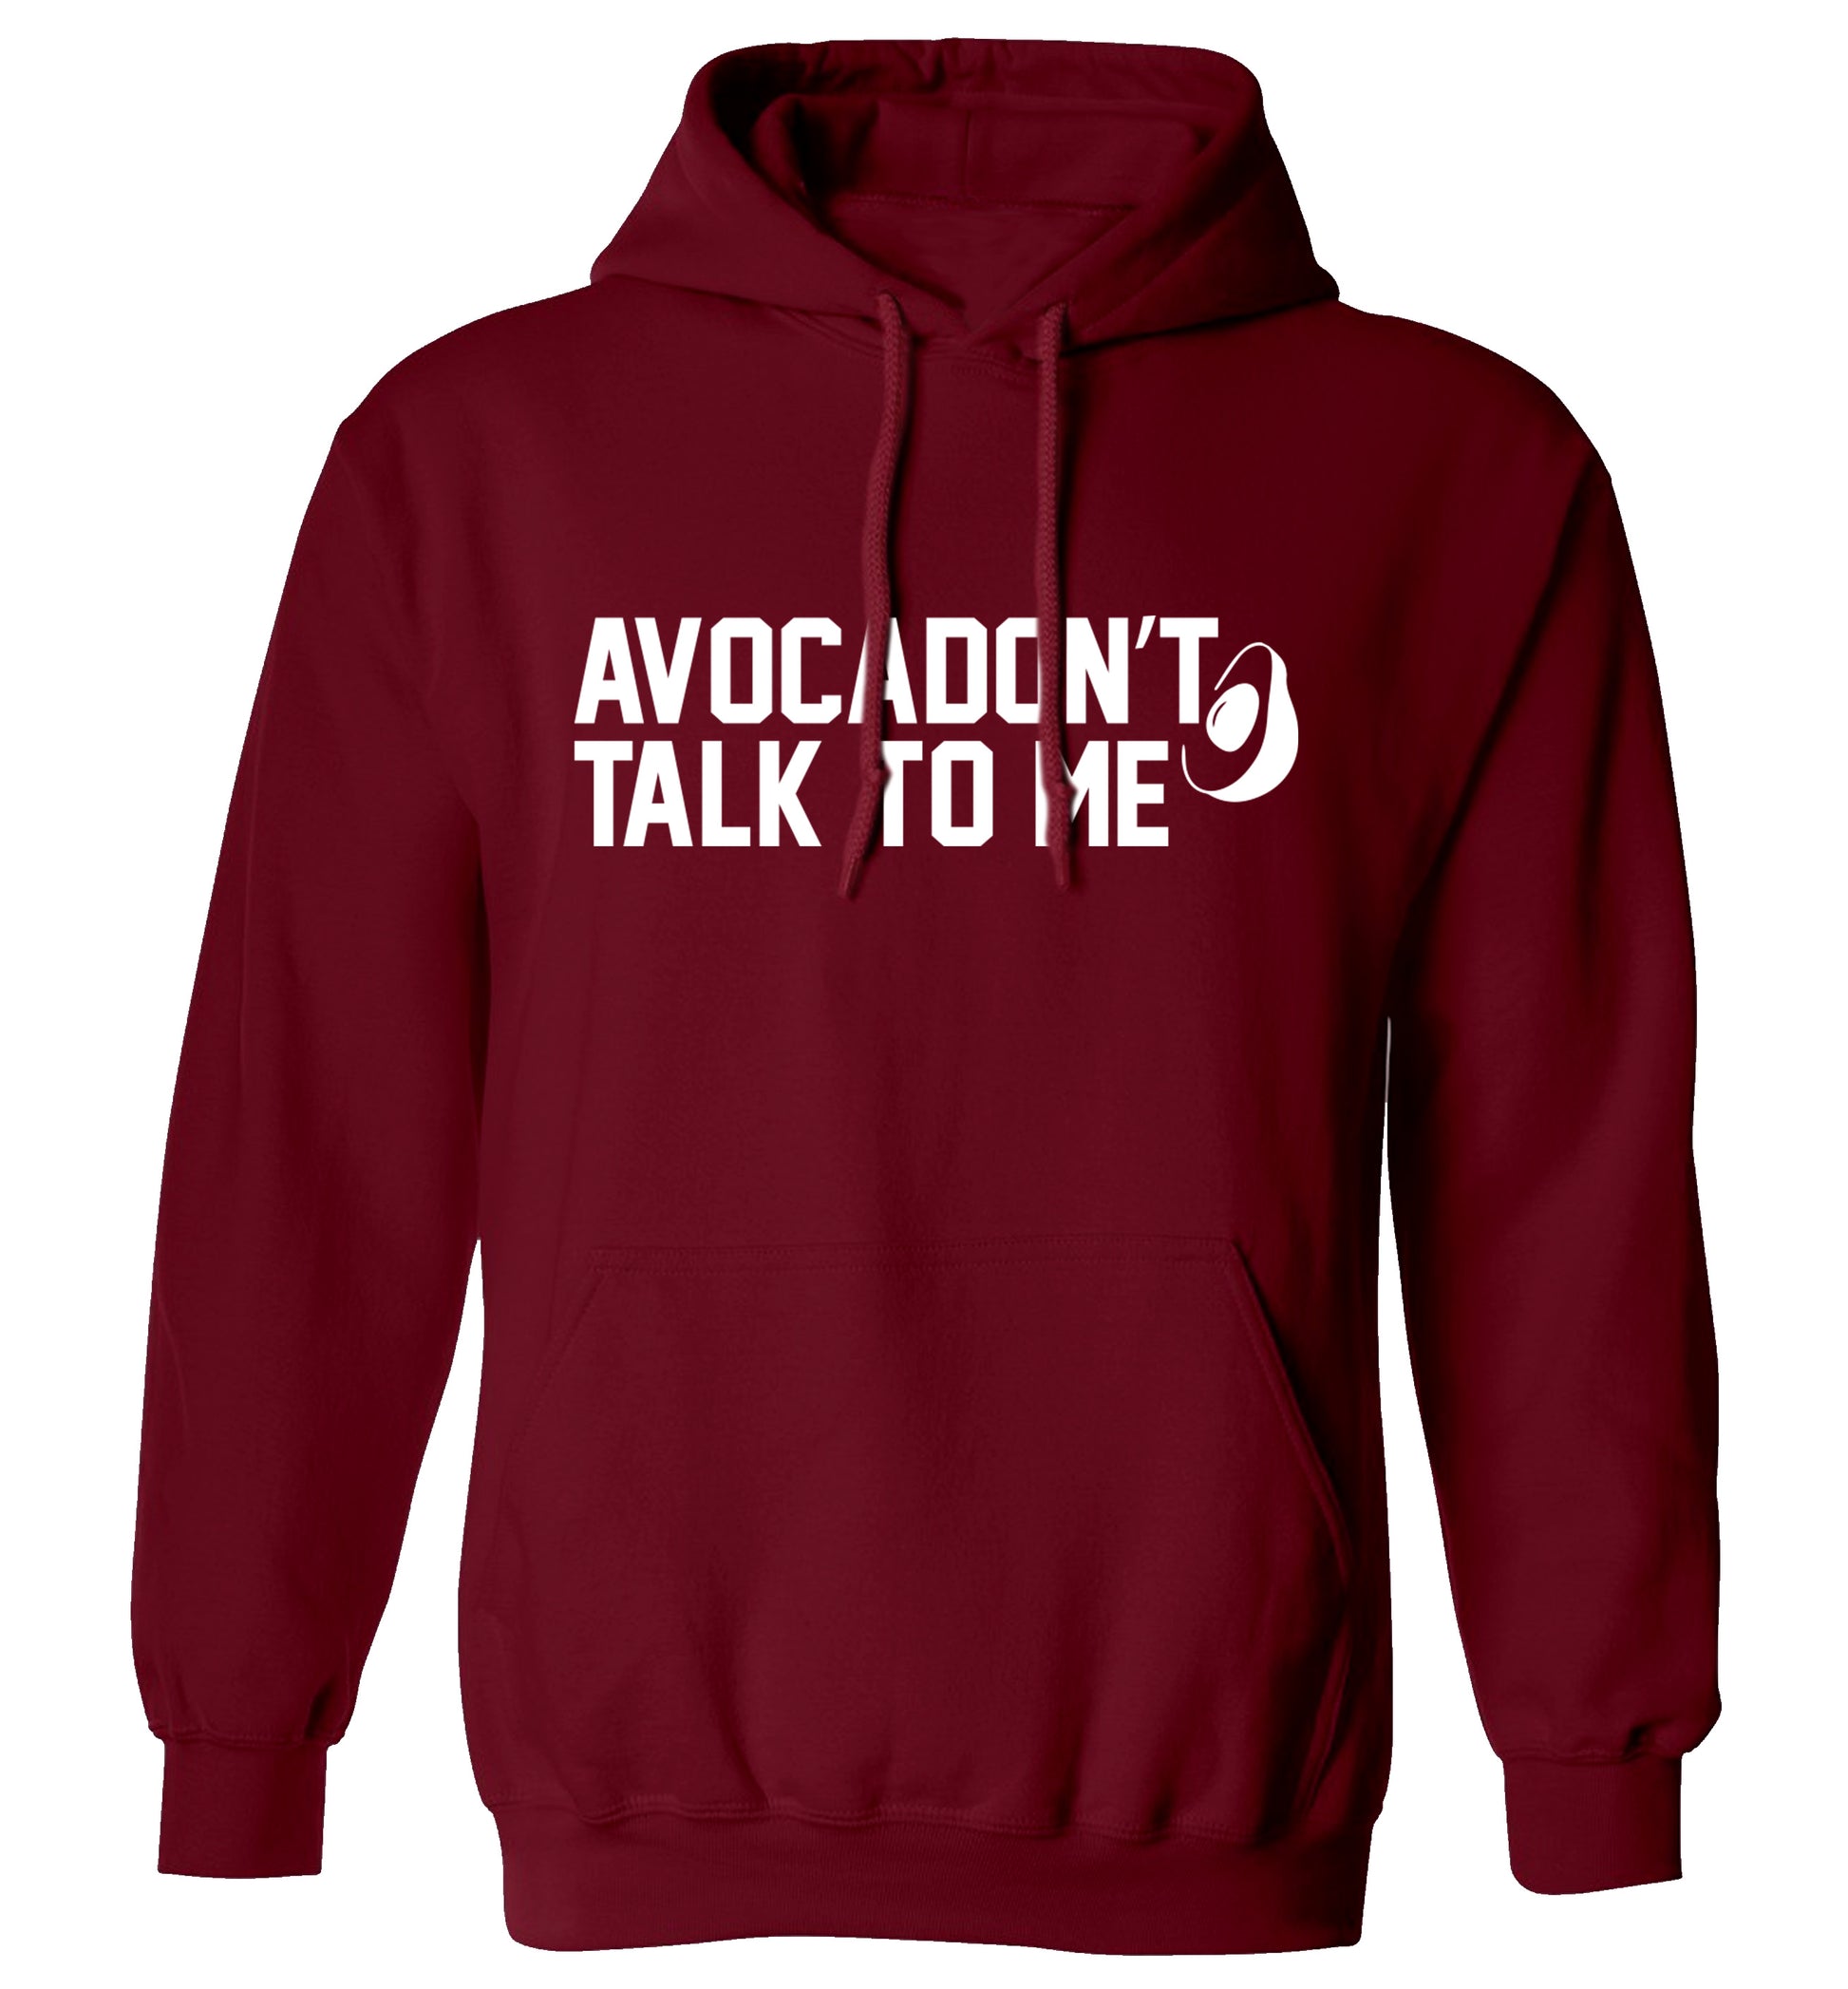 Avocadon't talk to me adults unisex maroon hoodie 2XL